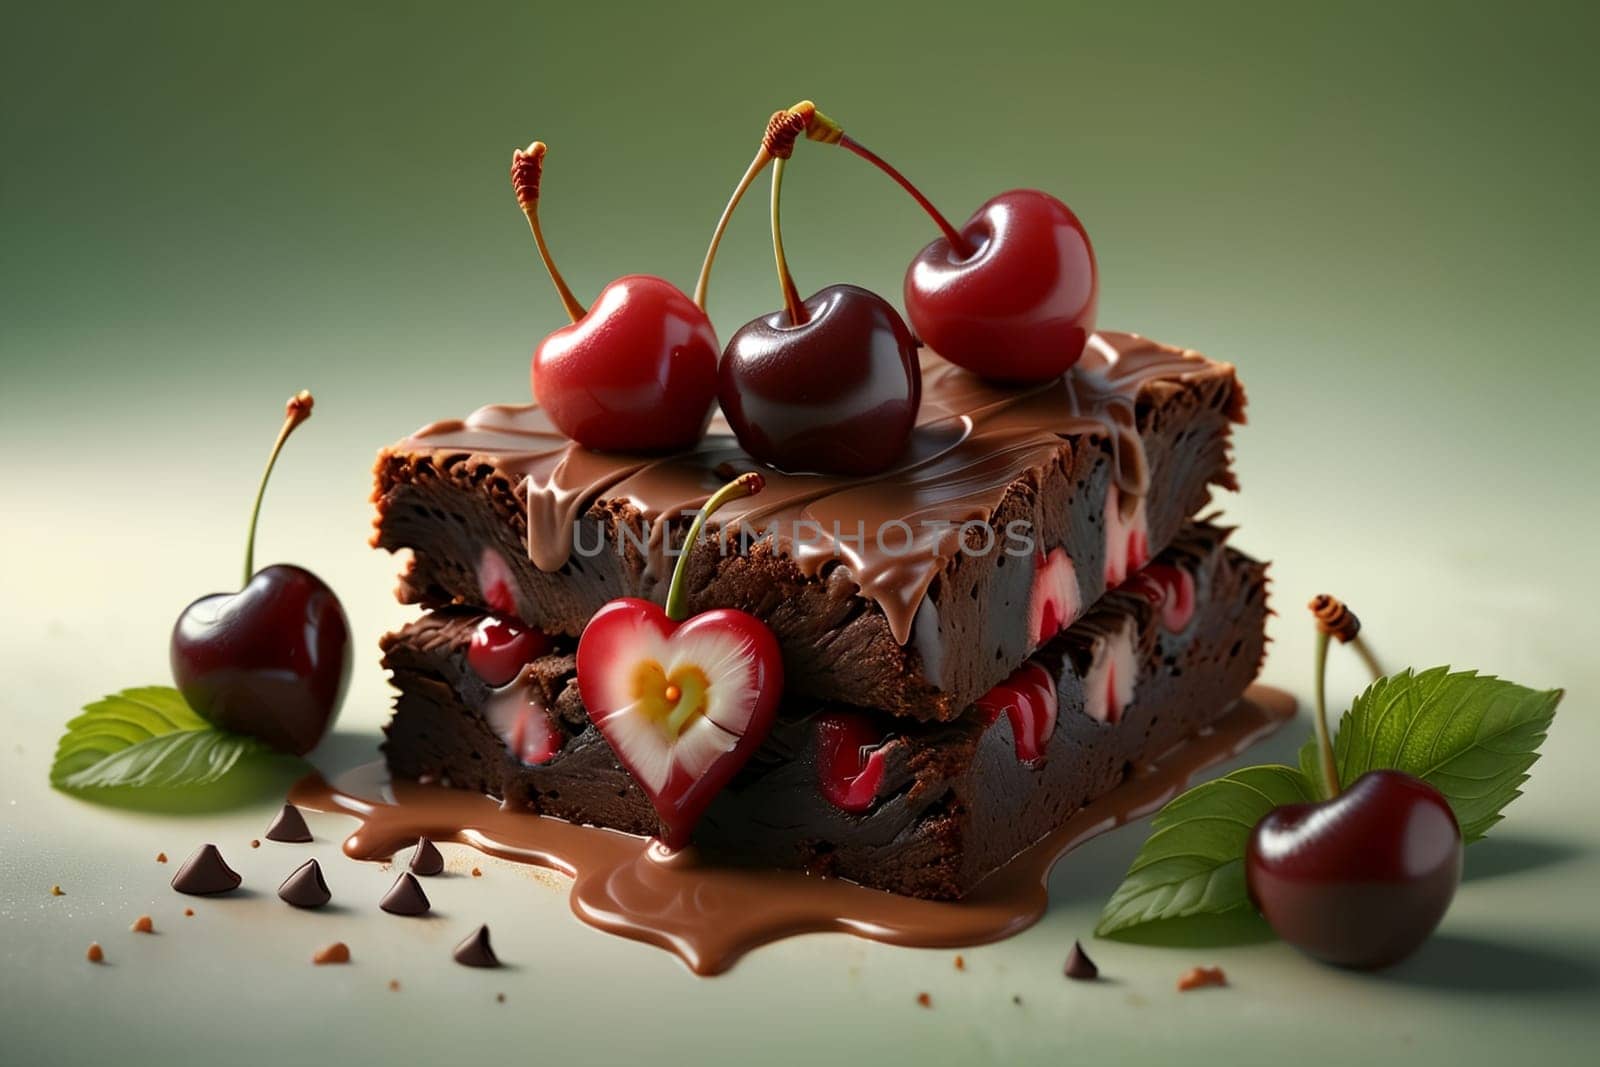 brownie cake with chocolate and cherry, glazed .